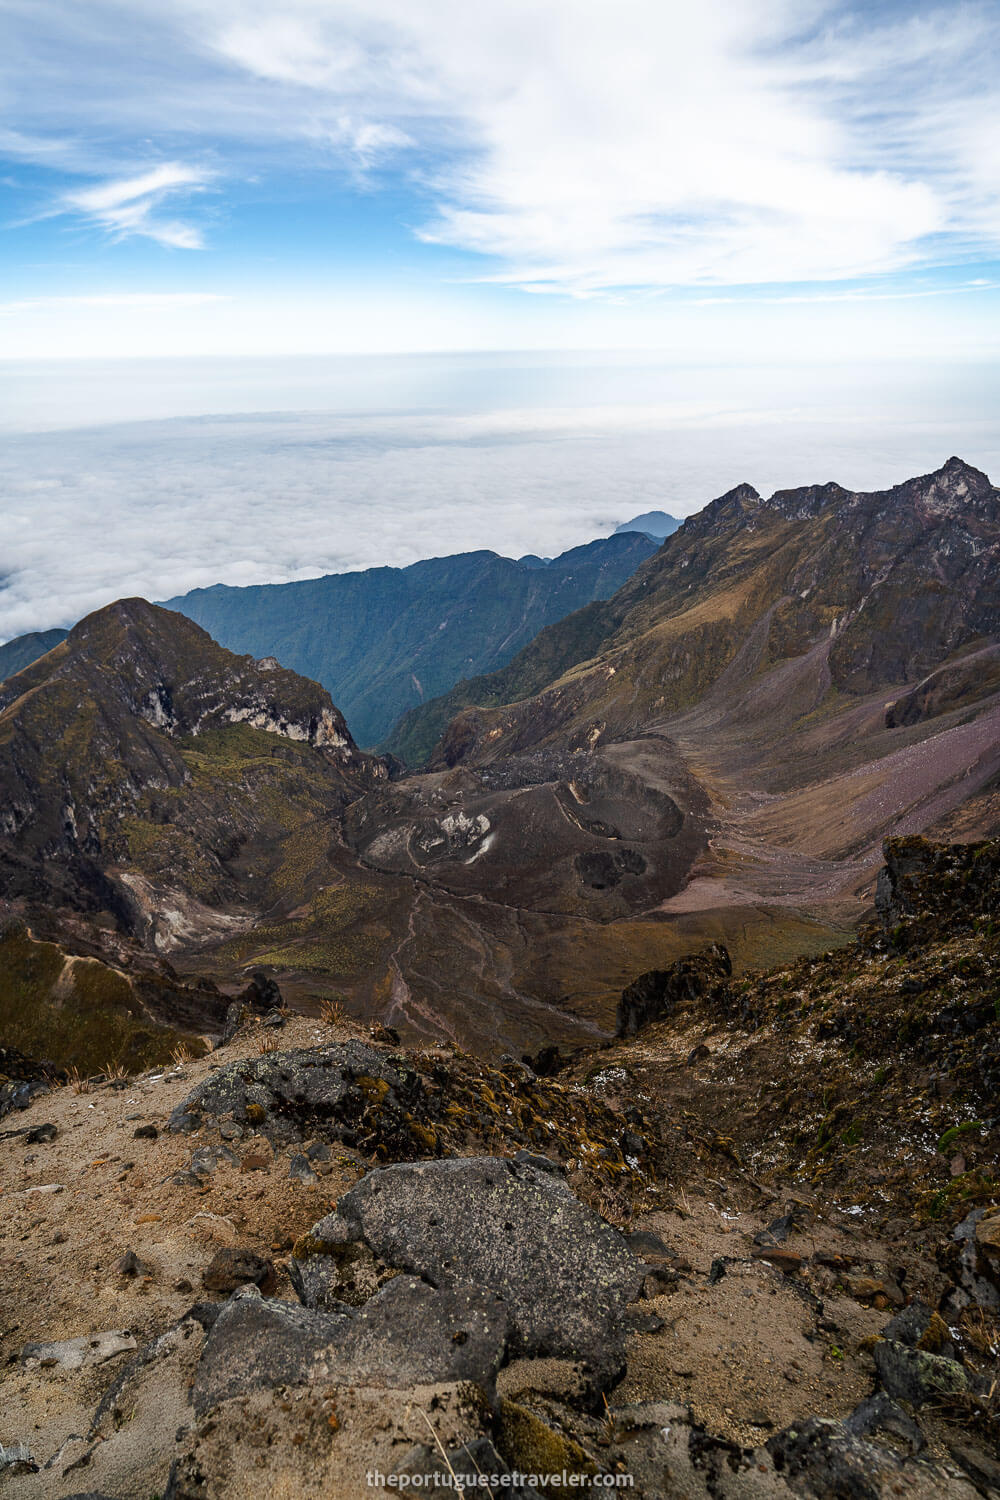 Guagua Pichincha Volcano's Crater, and a cloud inversion behind